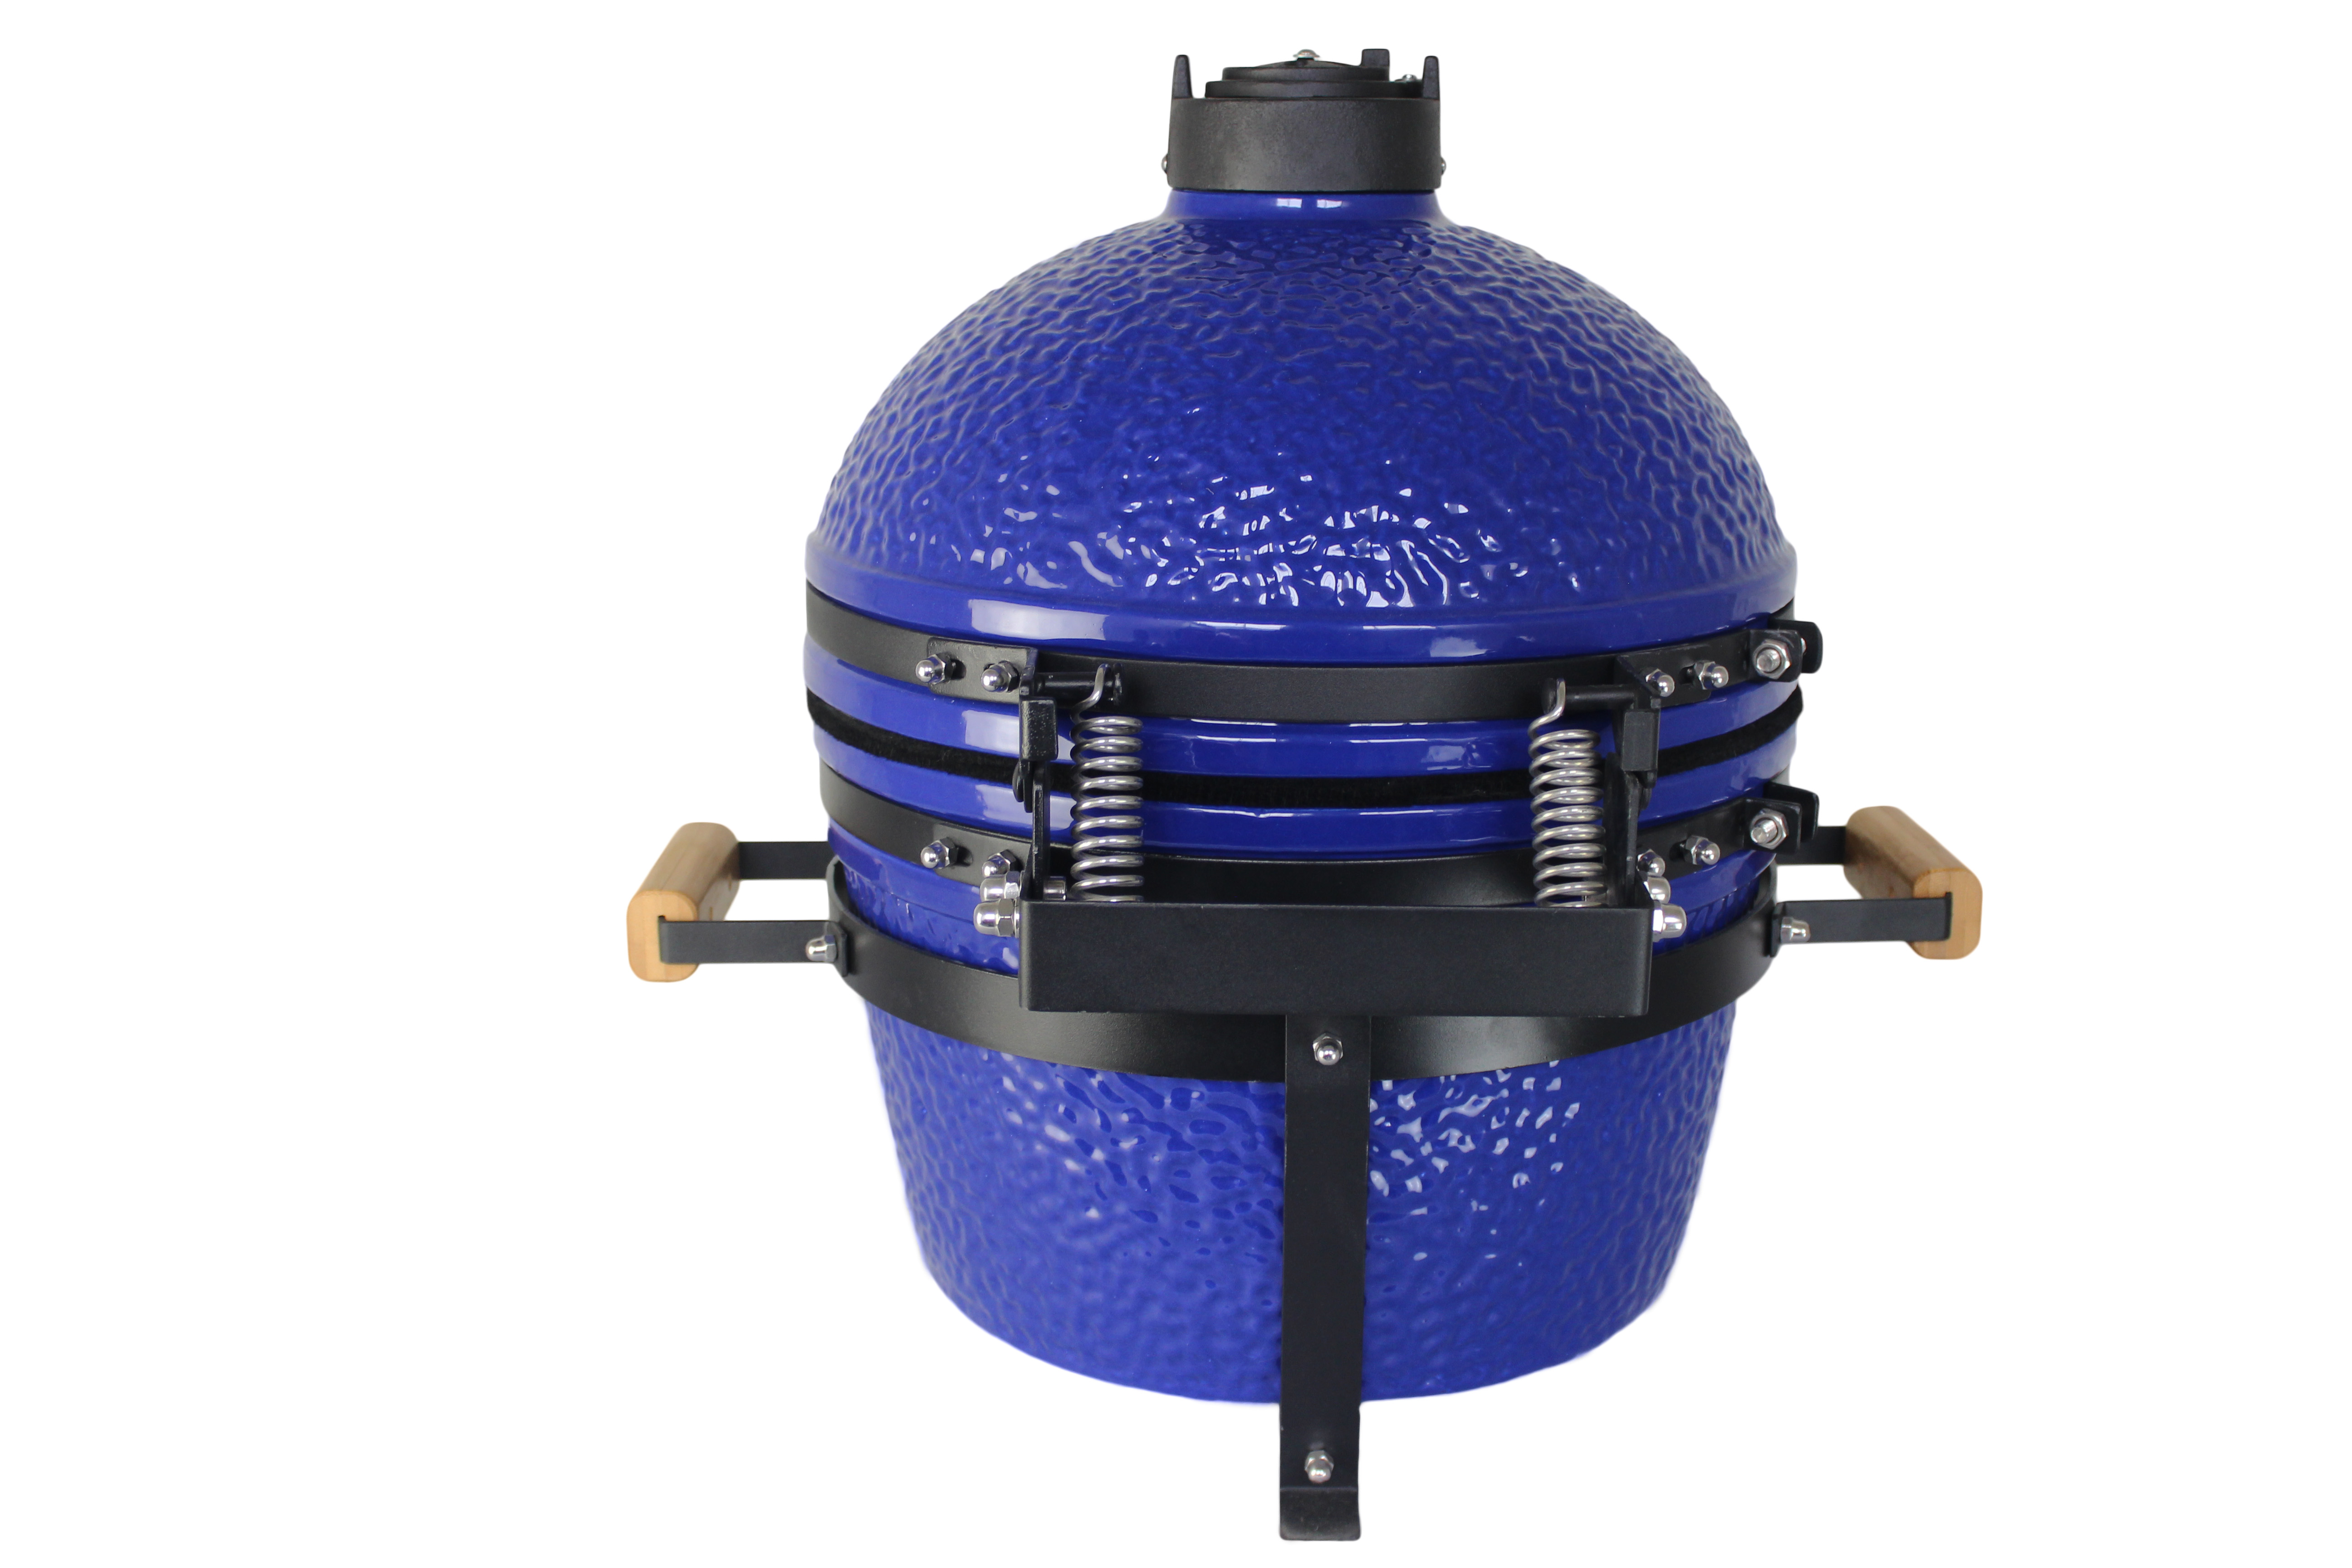 Auplex 16 inch mini size blue ceramic bbq grill Featured Image